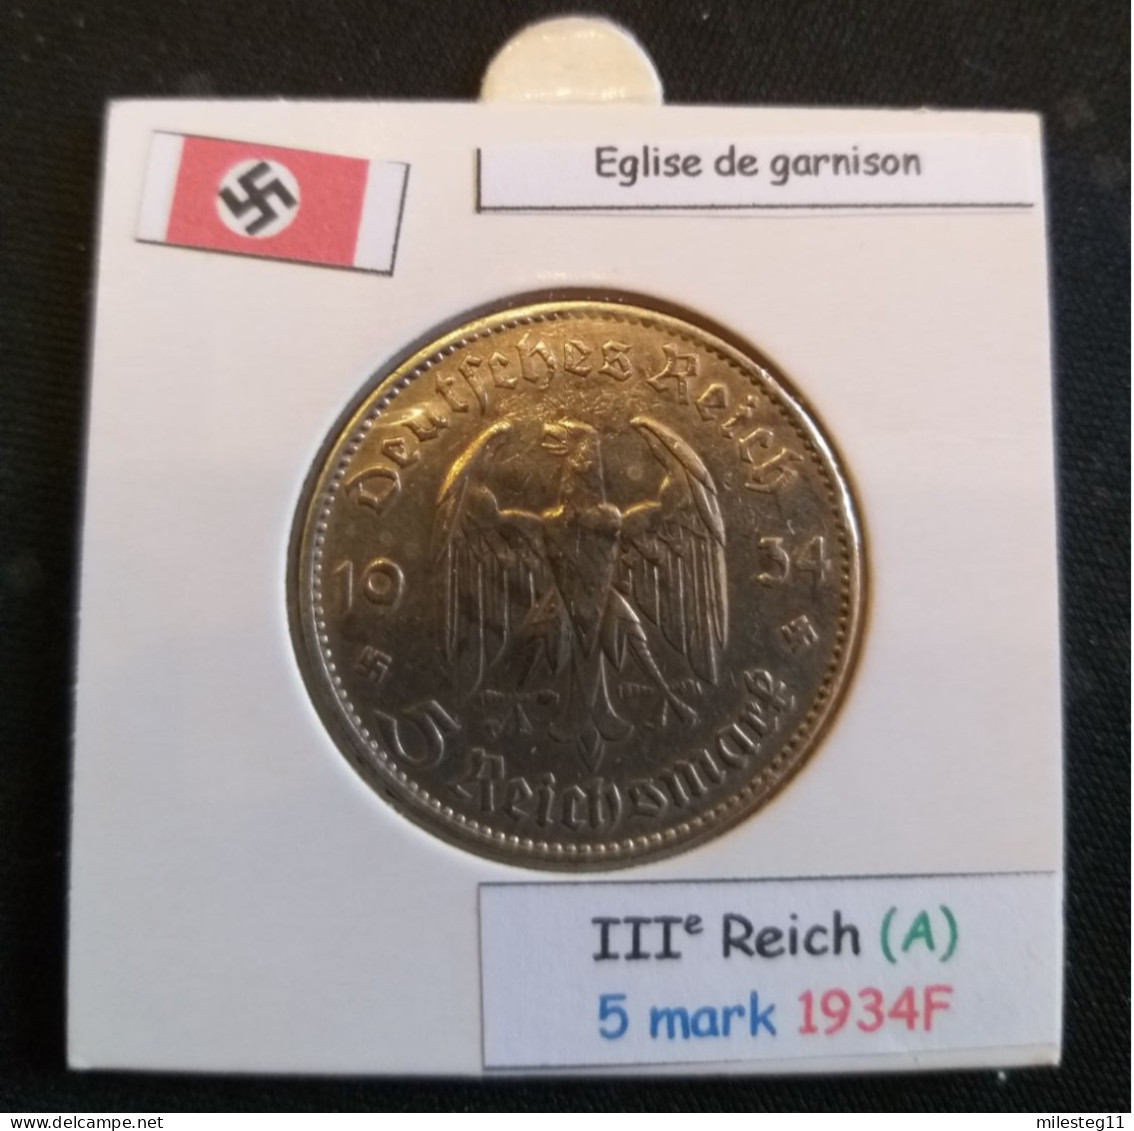 Pièce De 5 Reichsmark De 1934F (Stuttgard) Eglise De Garnison (position A) - 5 Reichsmark